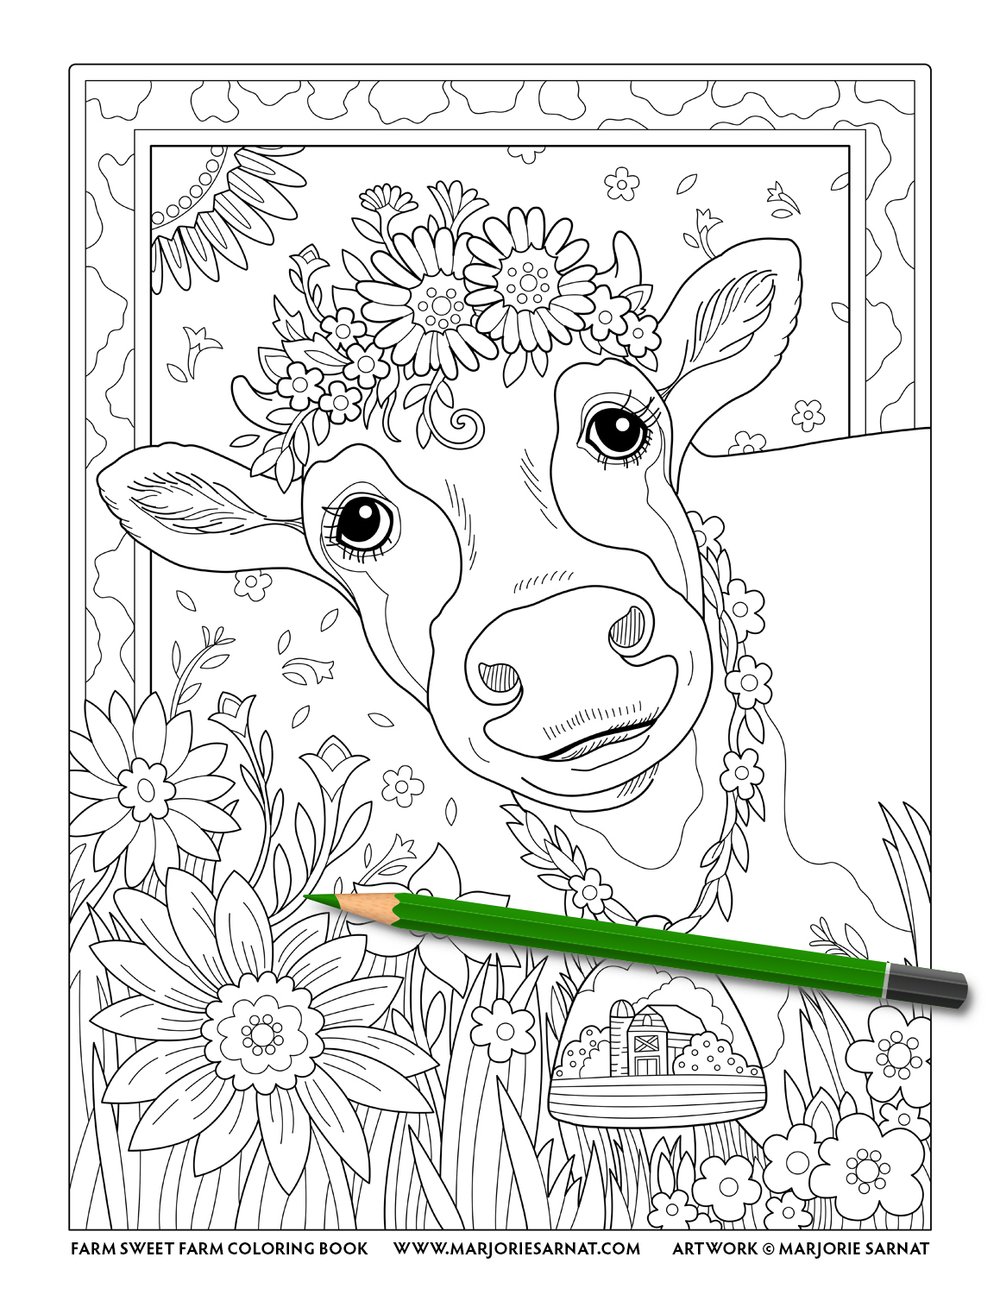 Farm sweet farm â marjorie sarnat design illustration